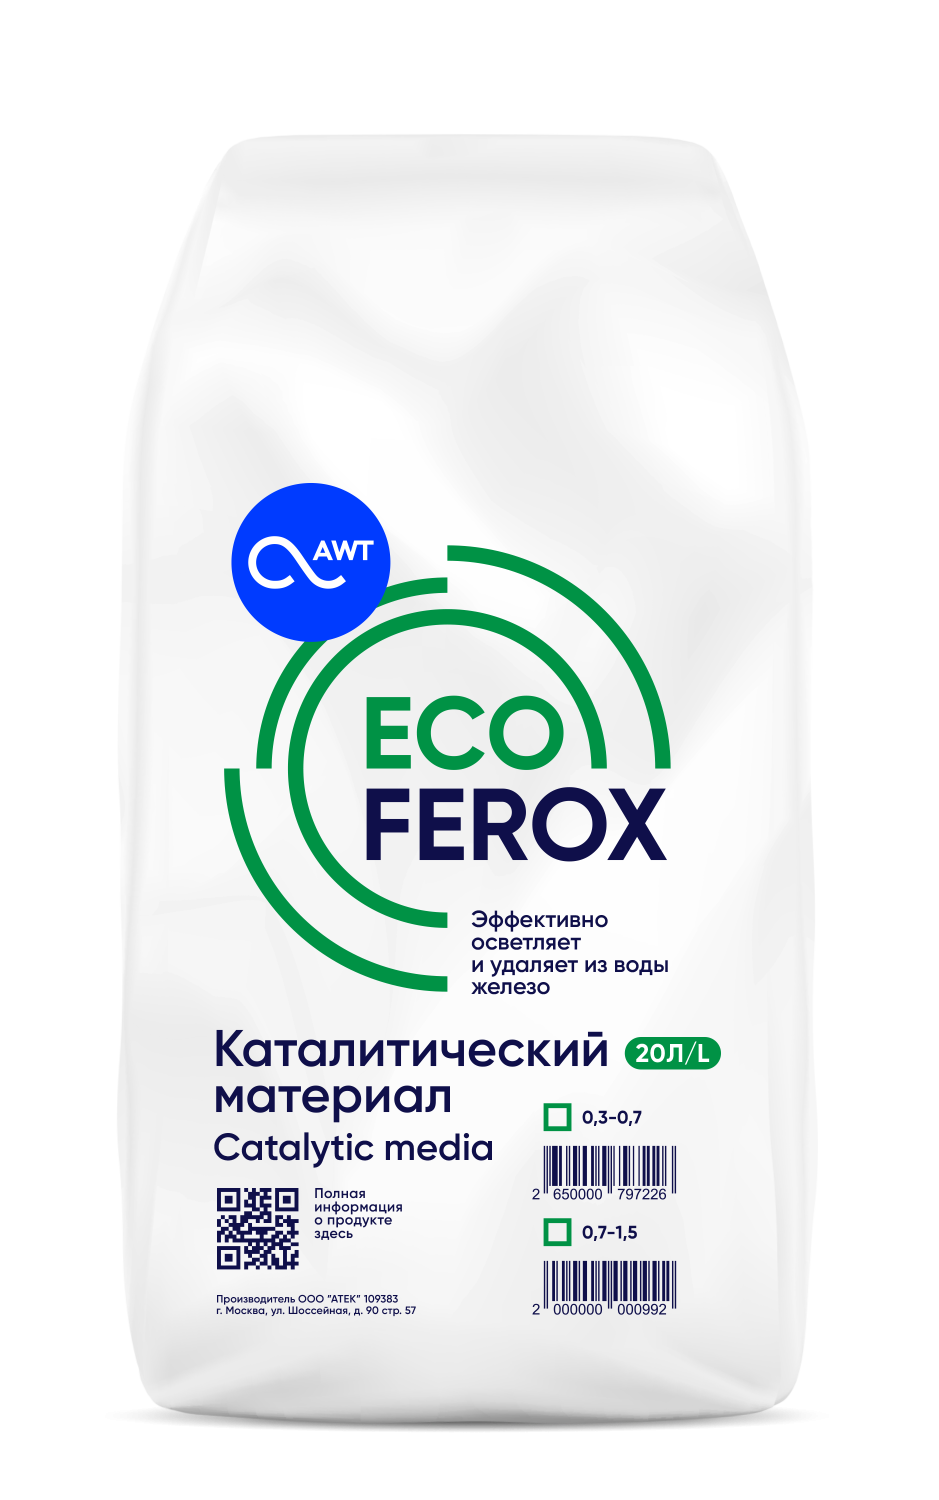 Загрузка обезжелезивания EcoFerox (20л, 10-13 кг) фр. 0.7-1.5